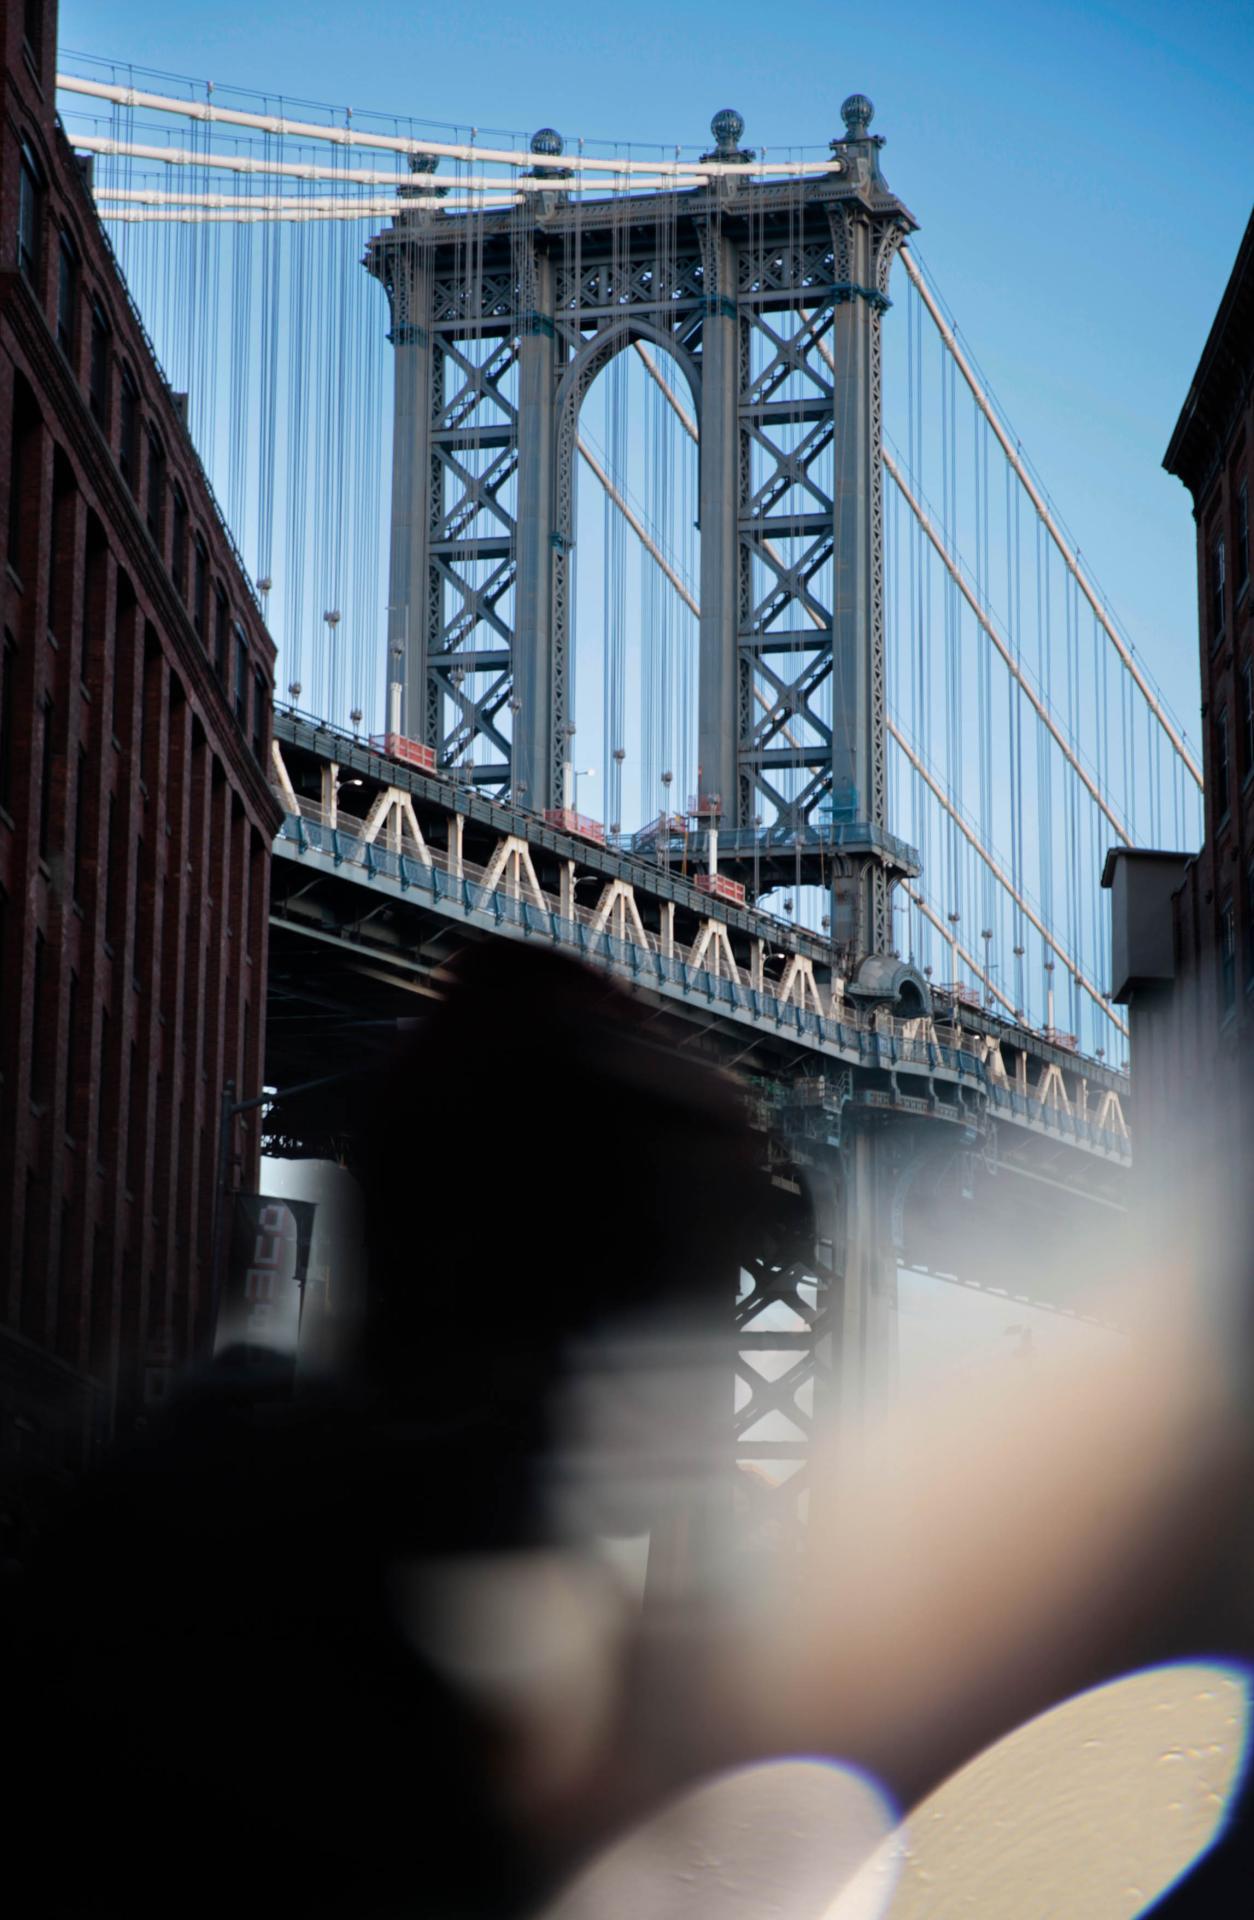 New York Photography Awards Winner - Tourista Cinematica